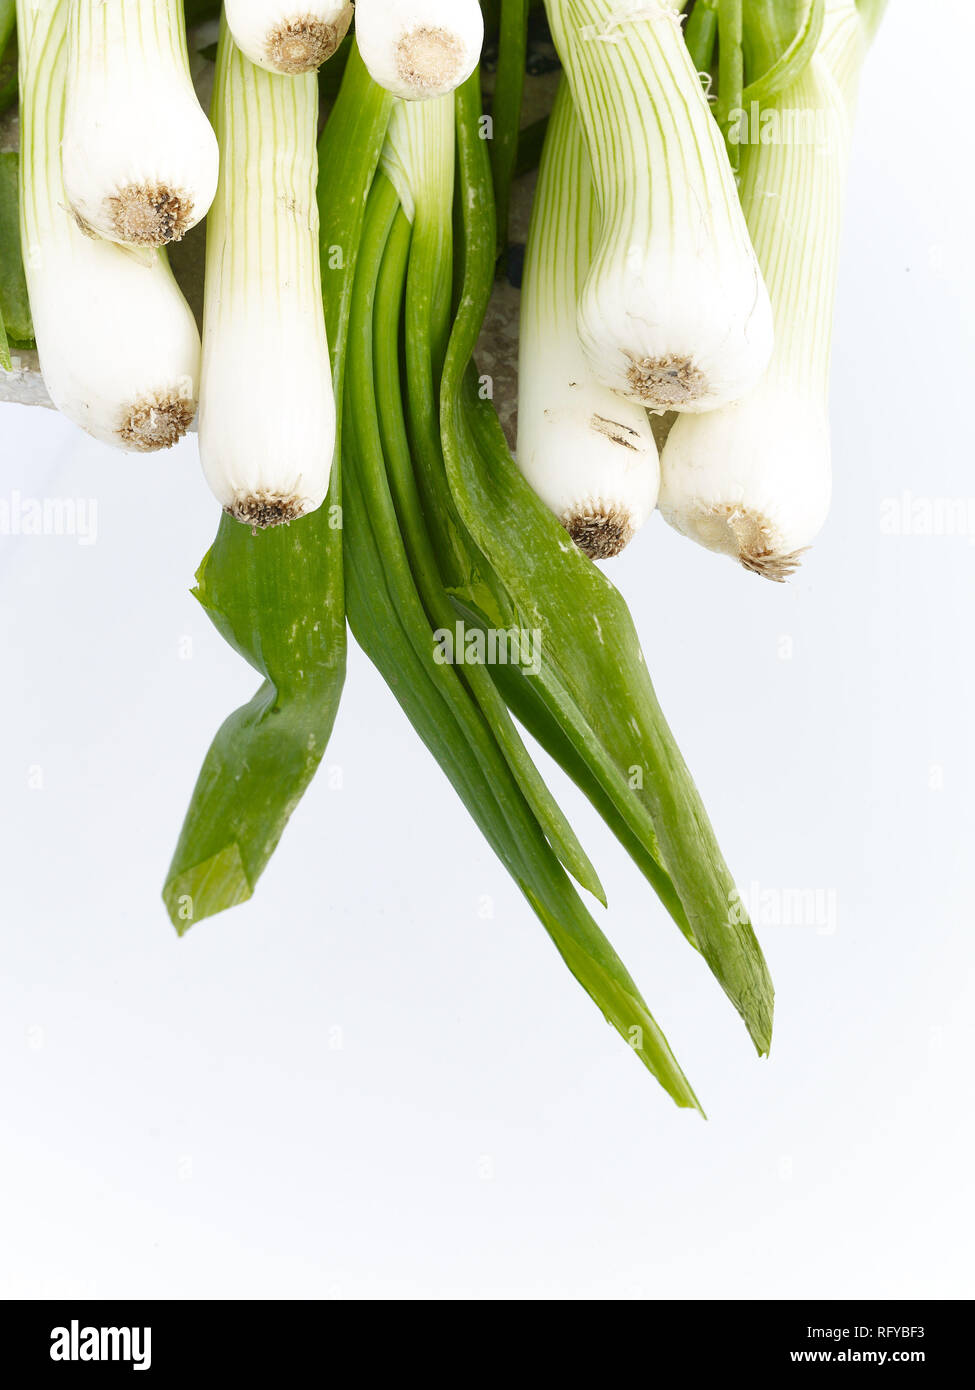 Spring onions, scallion, vegetable food still-life photograph Stock Photo